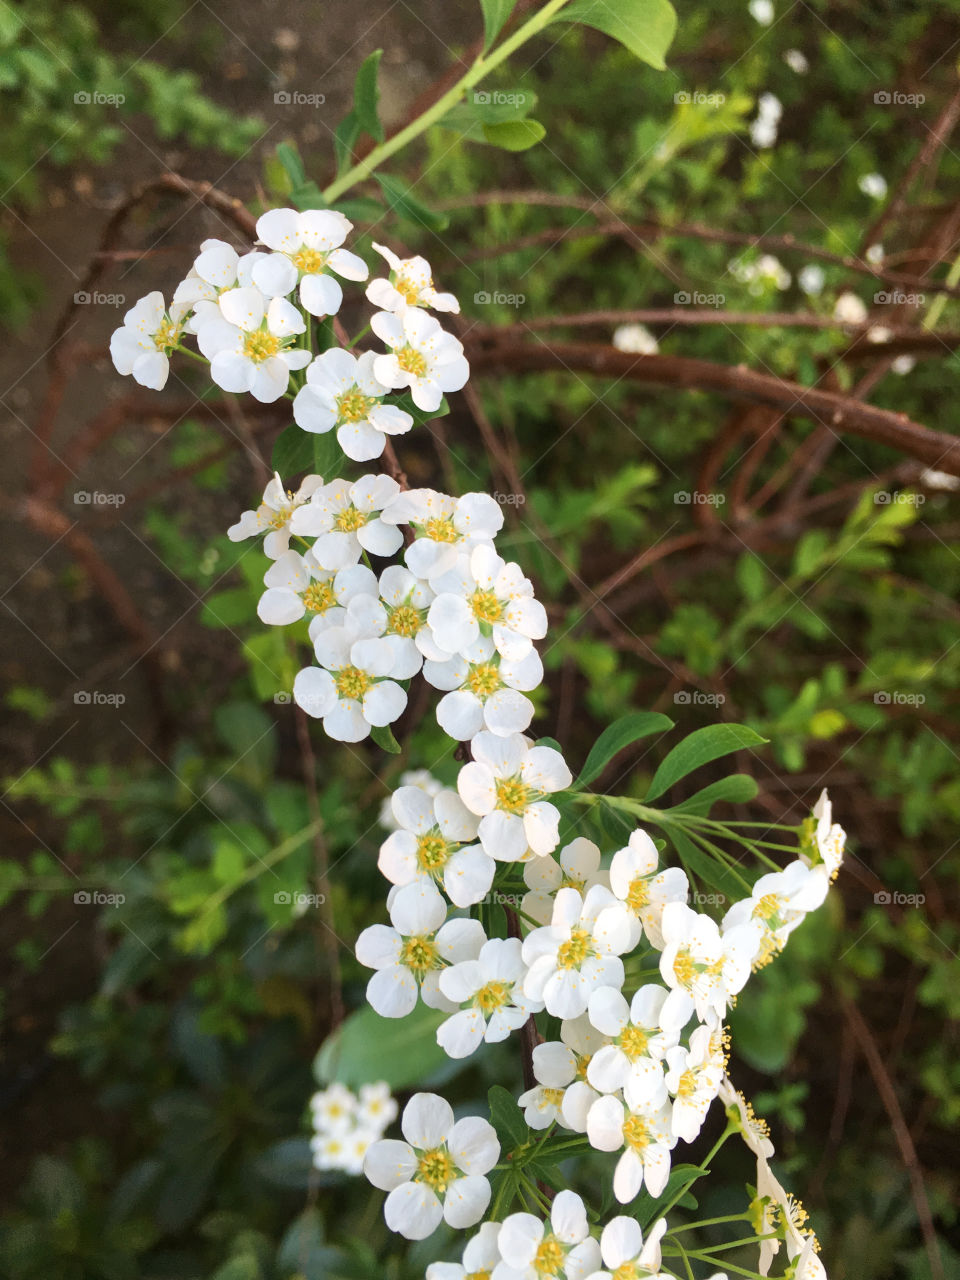 Small wild white flowers